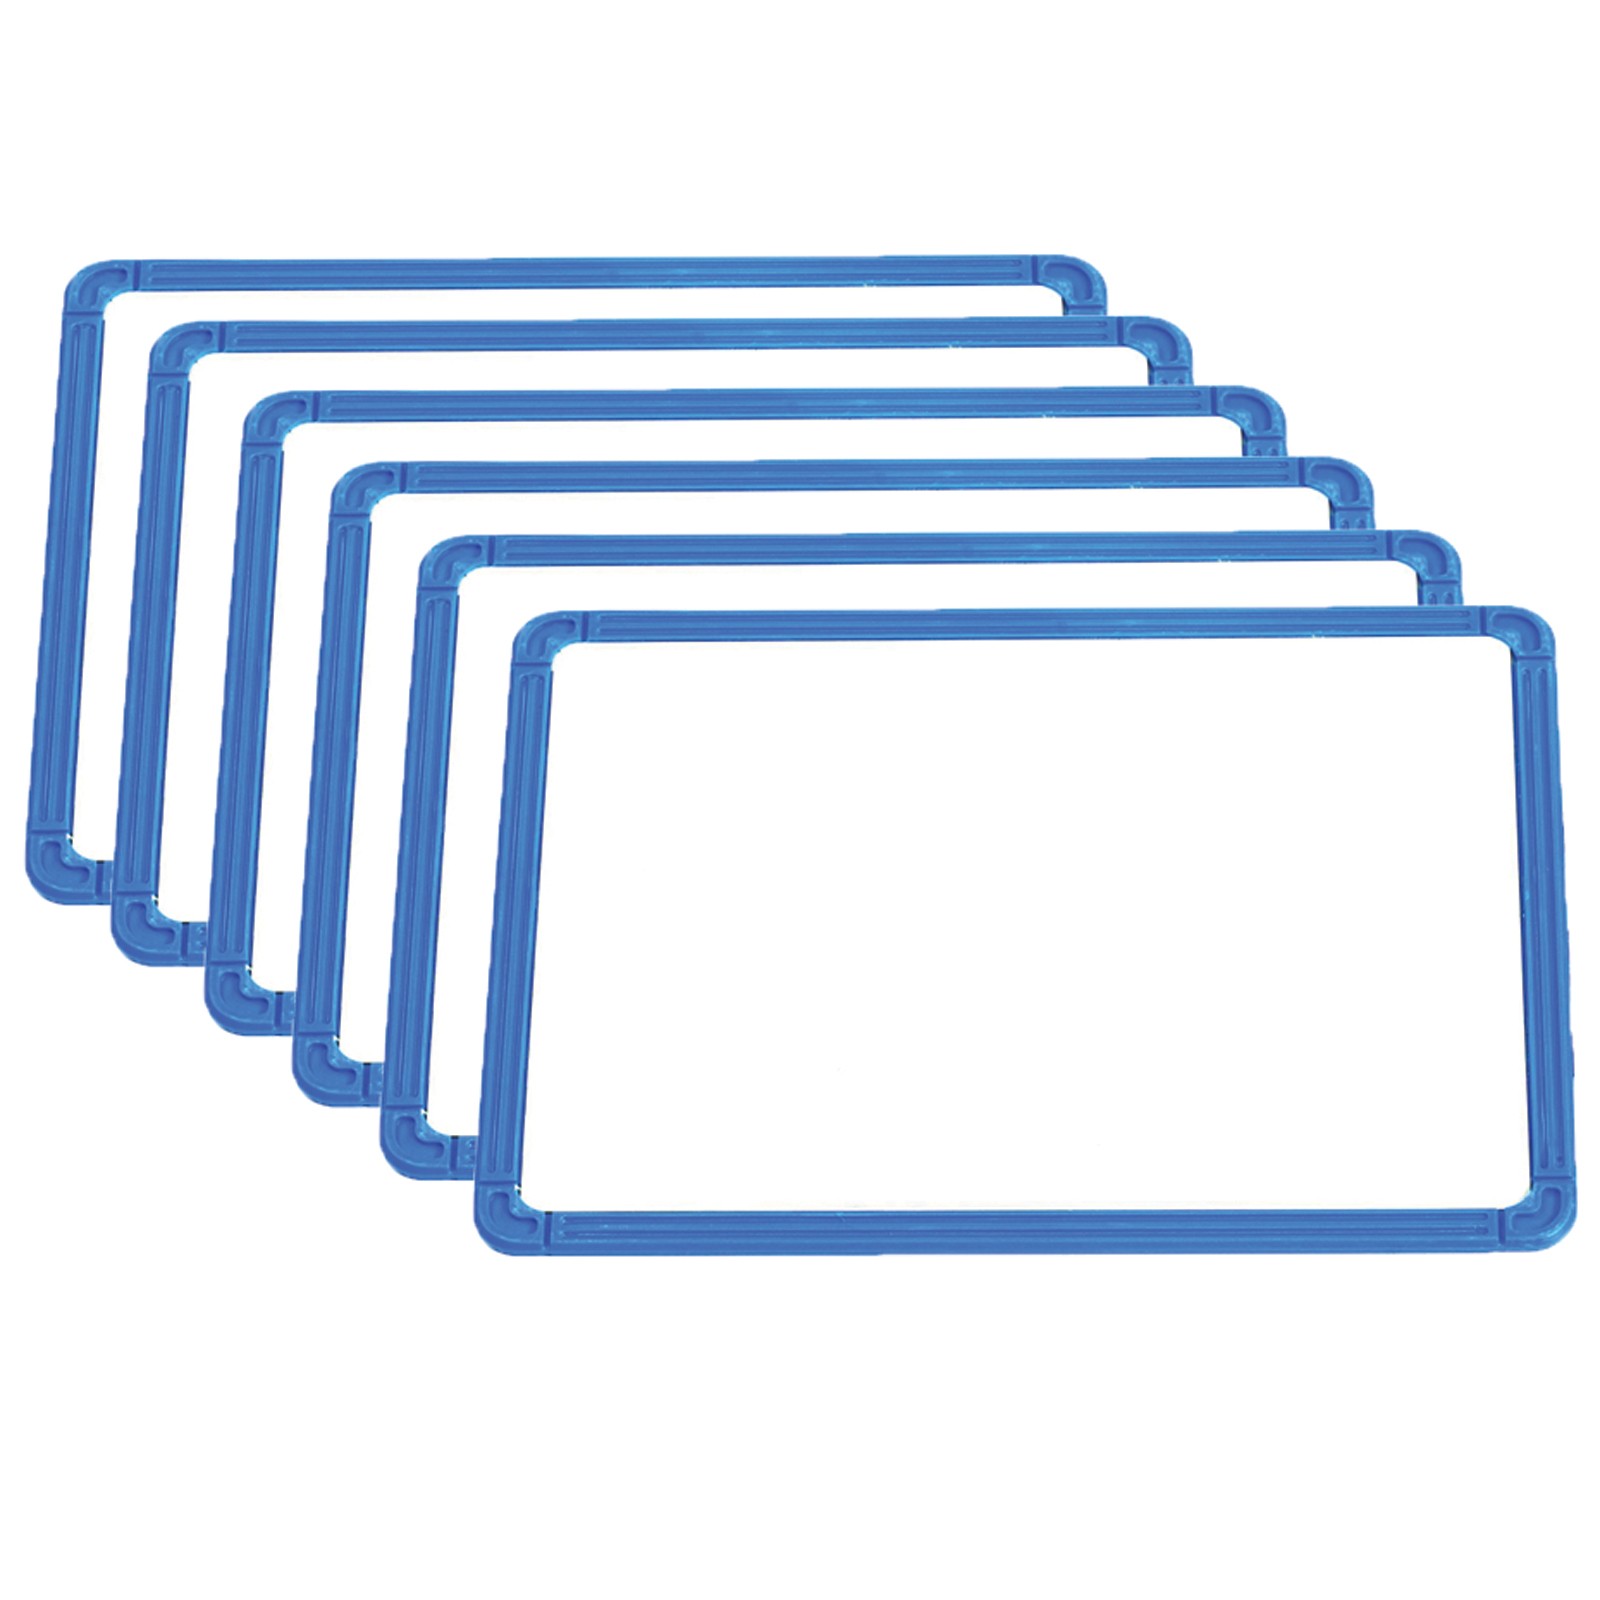 Plastic Framed Metal Whiteboards - Blue - Set of 6